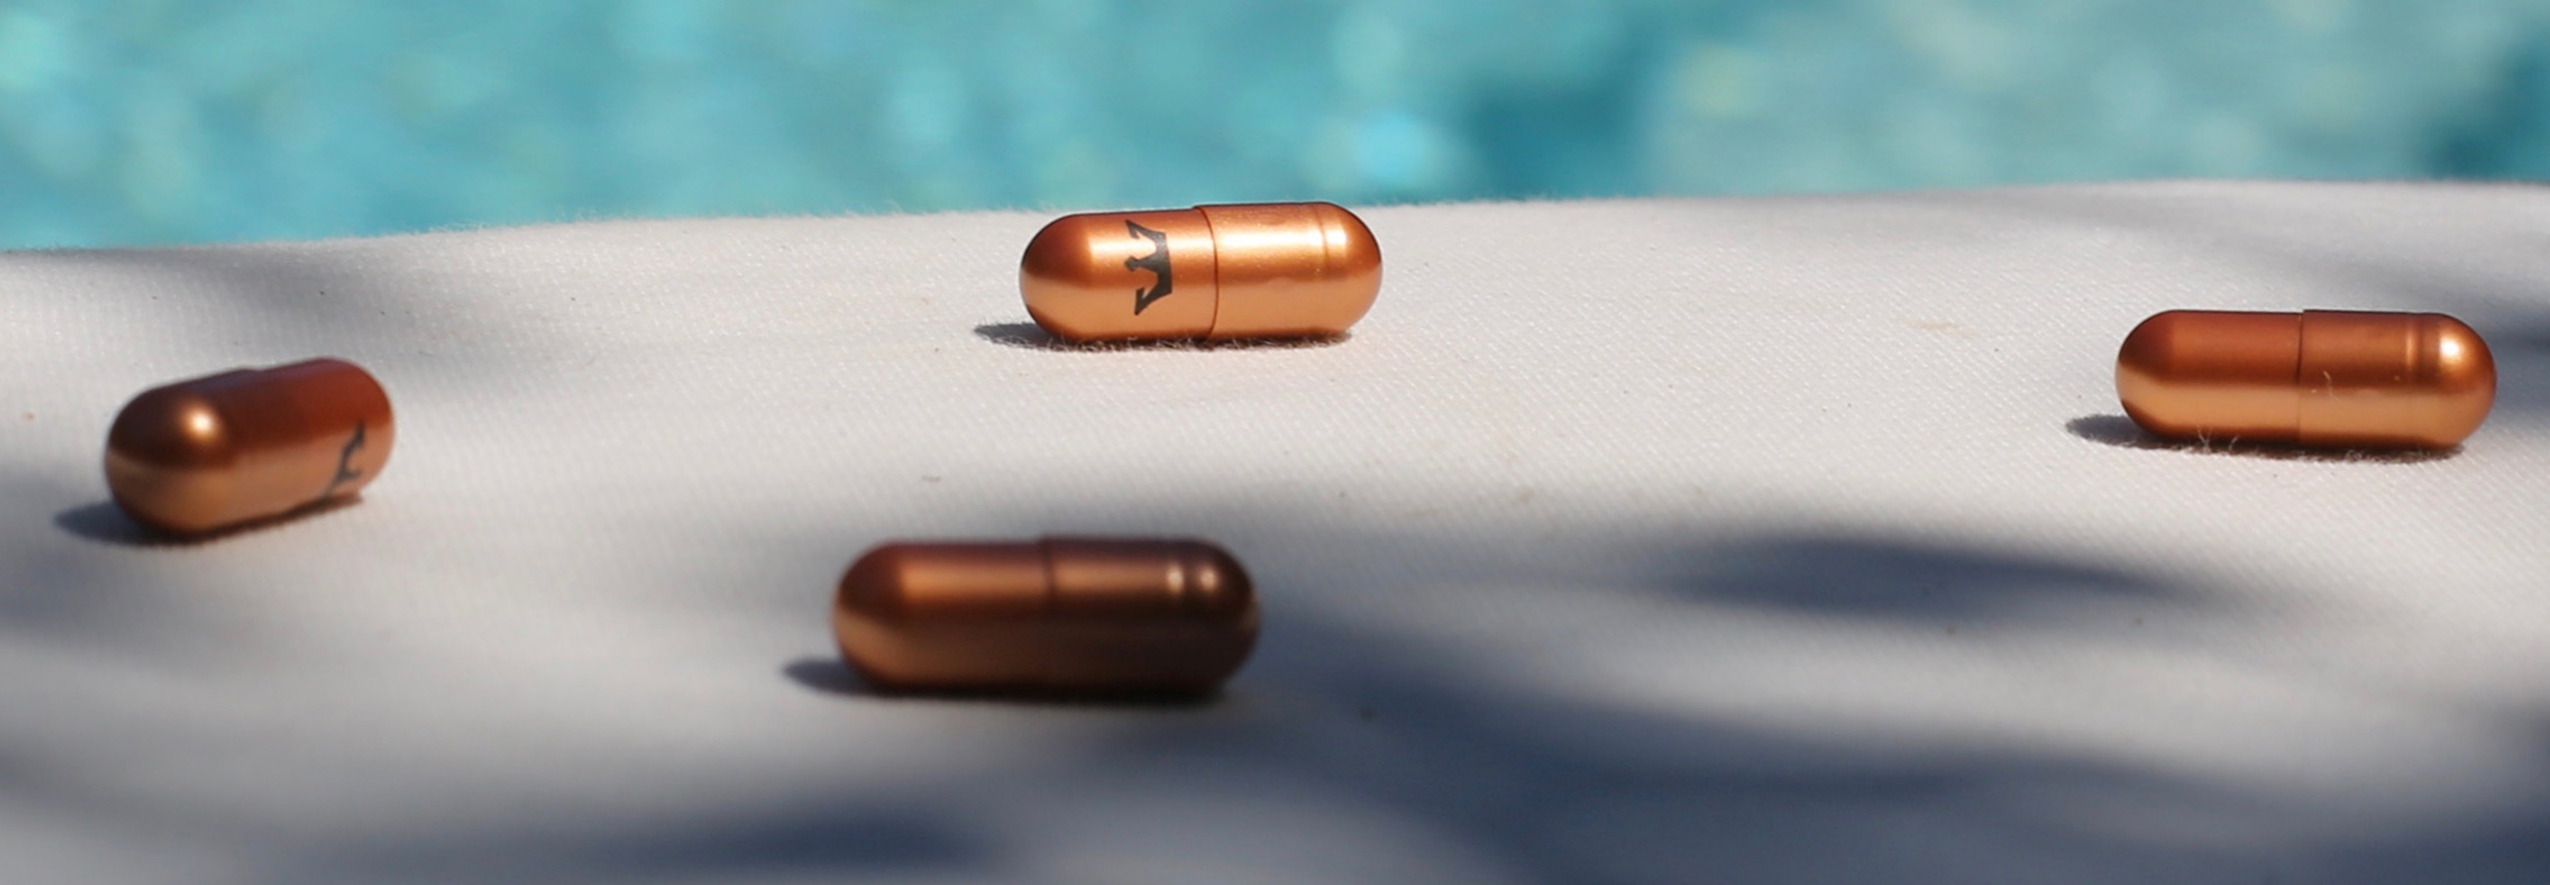 Supplement pills near swimming pool - perimenopause